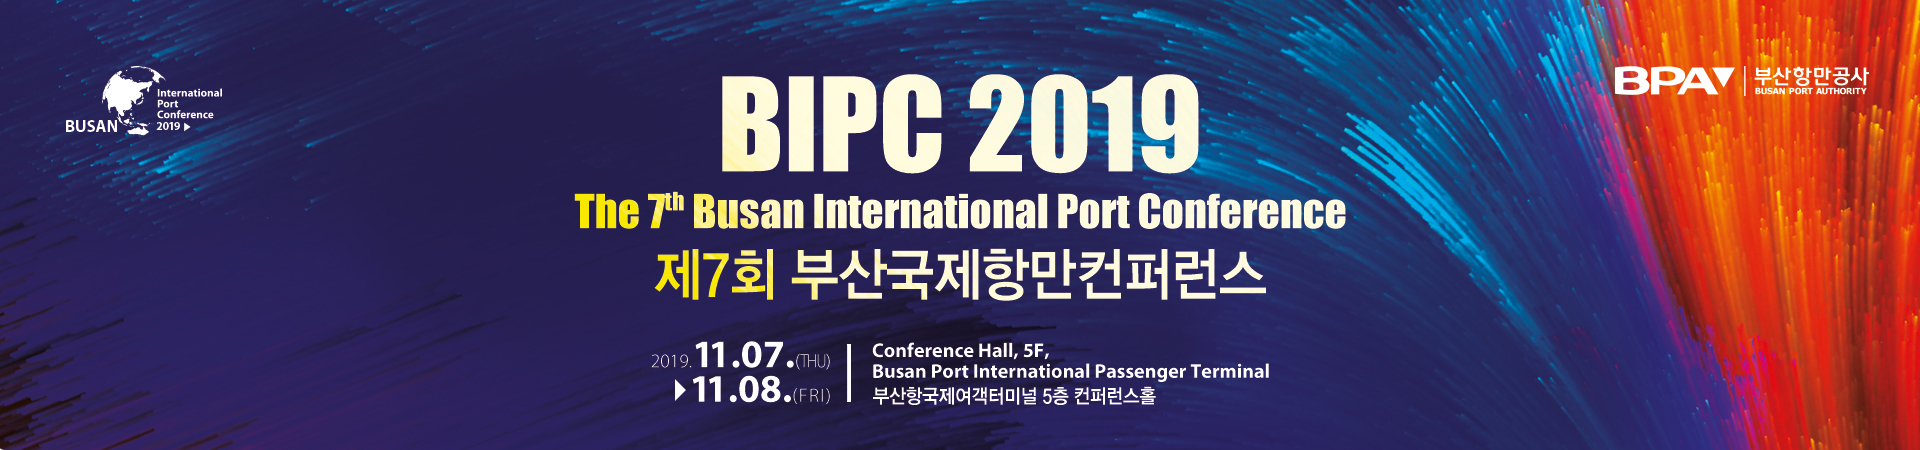 Busan International Port Conference